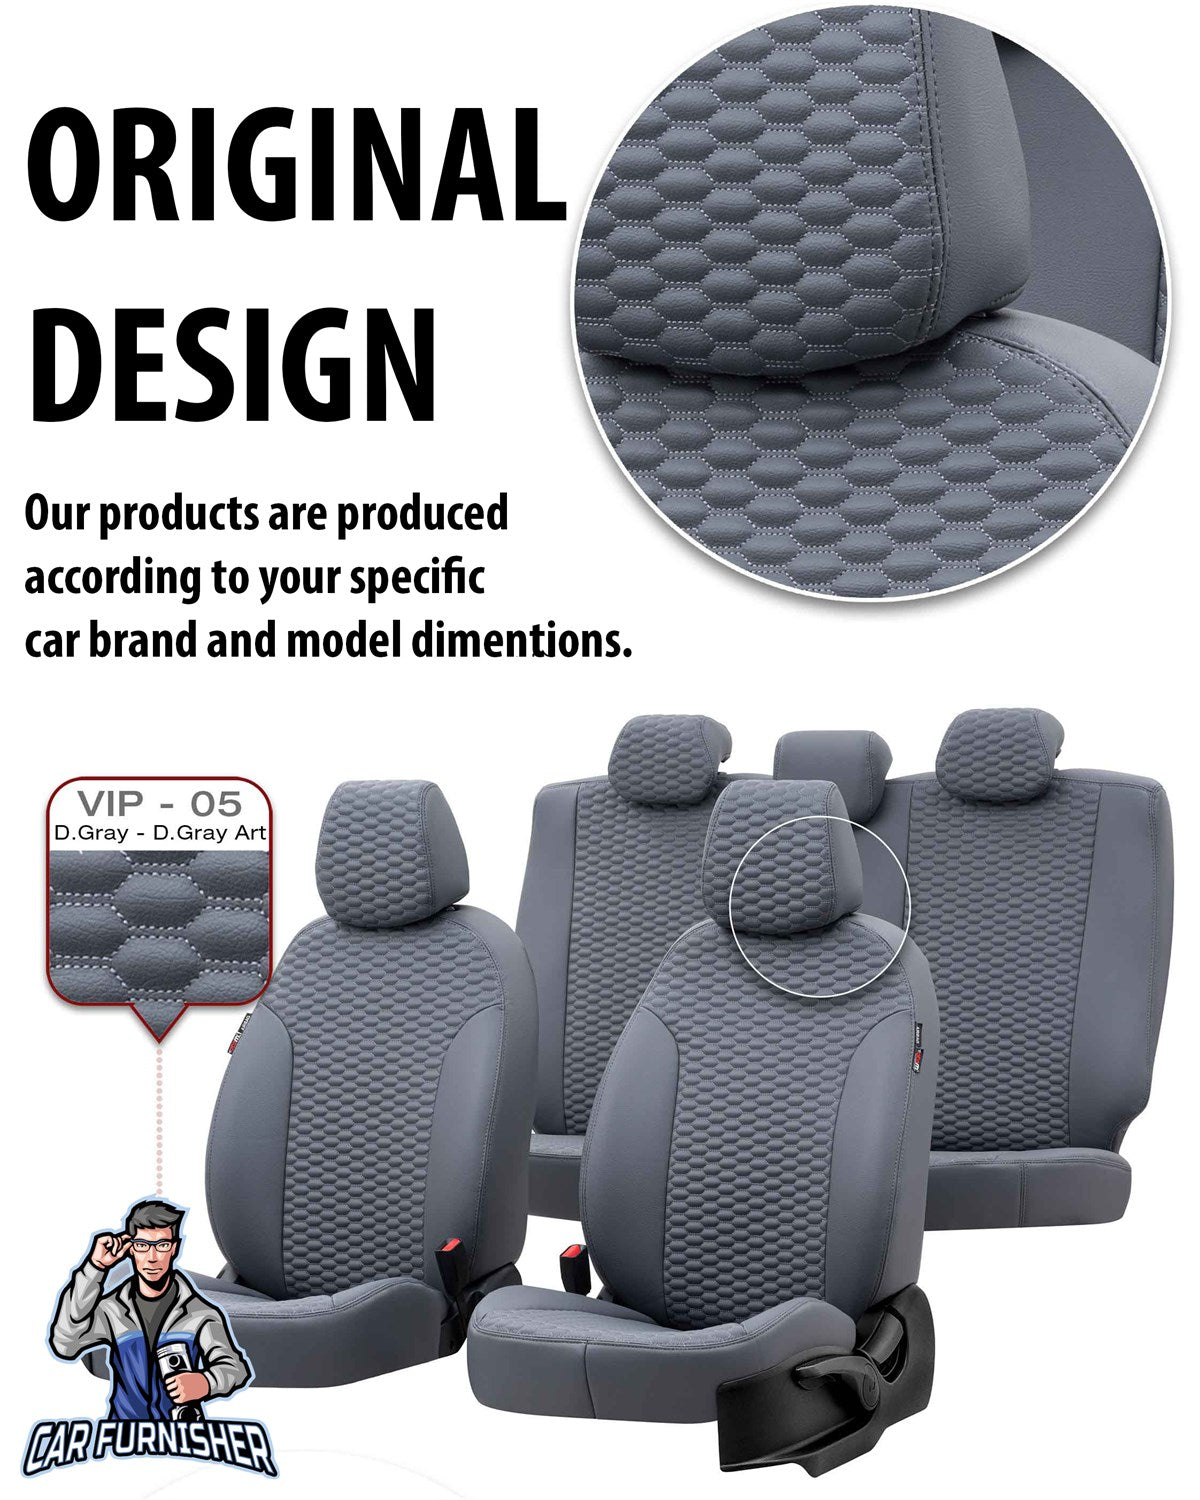 Isuzu Nlr Seat Covers Tokyo Leather Design Black Leather